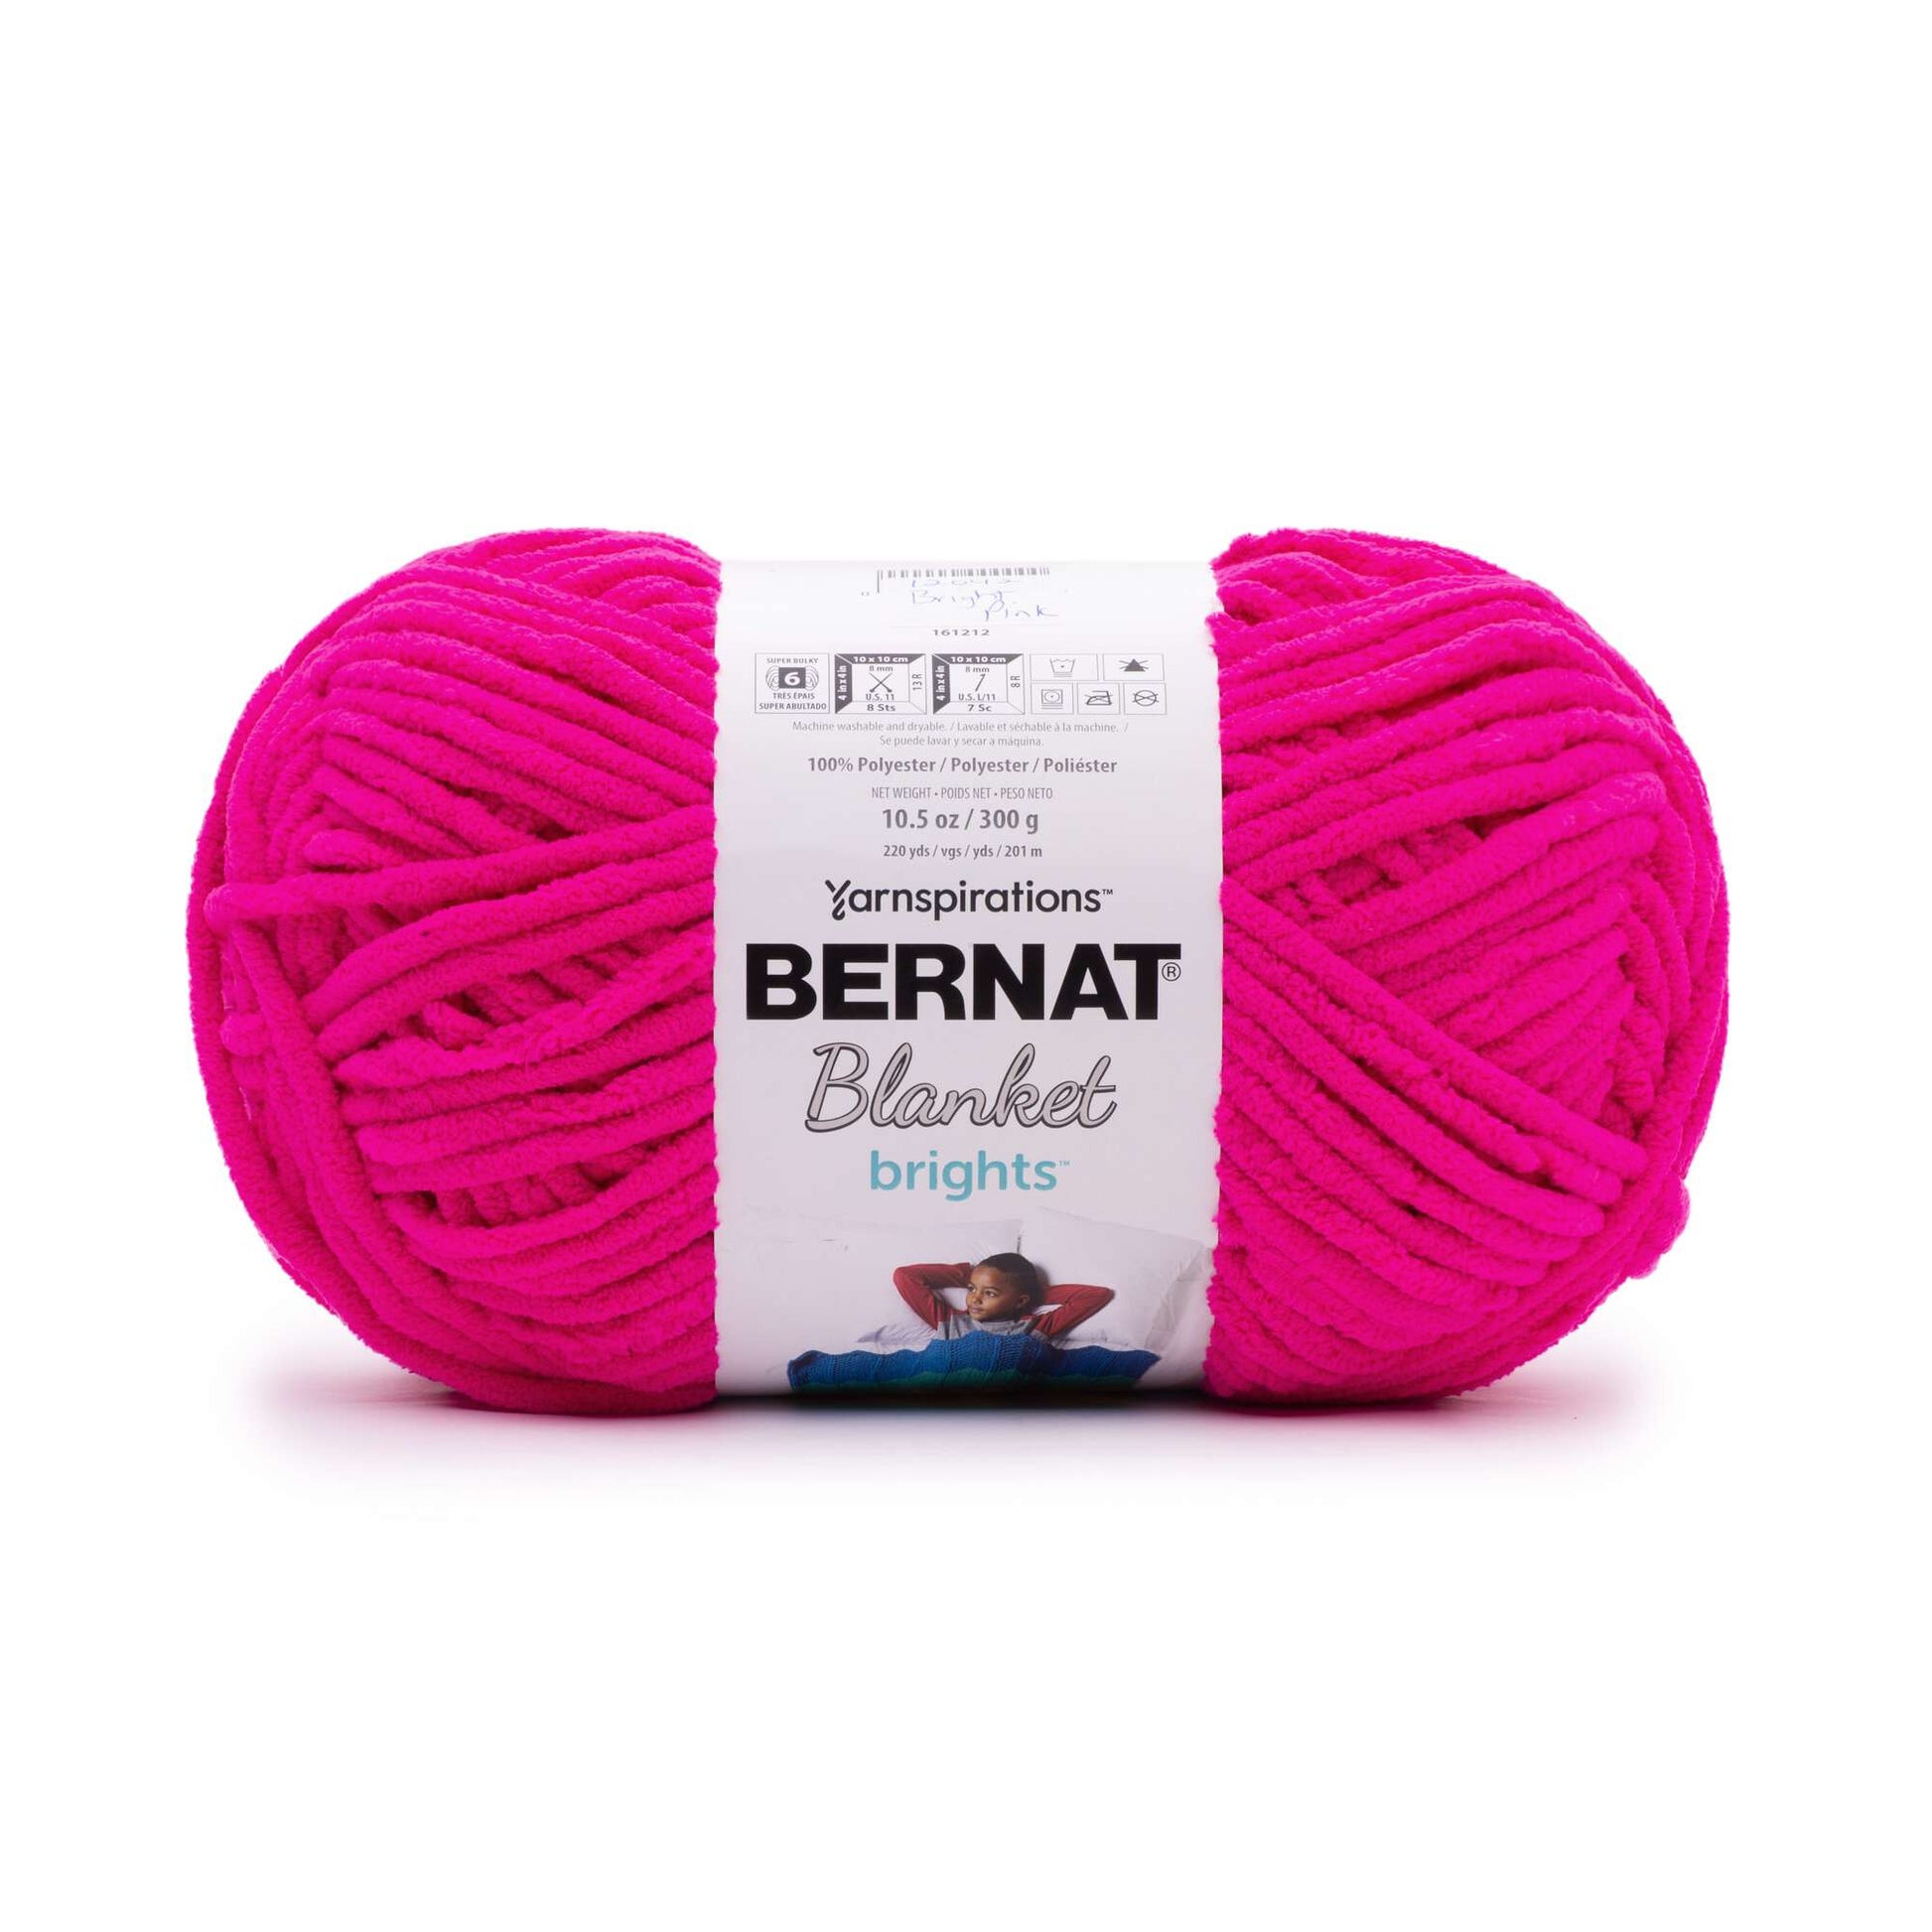 Bernat Blanket Brights Yarn (300g/10.5oz)